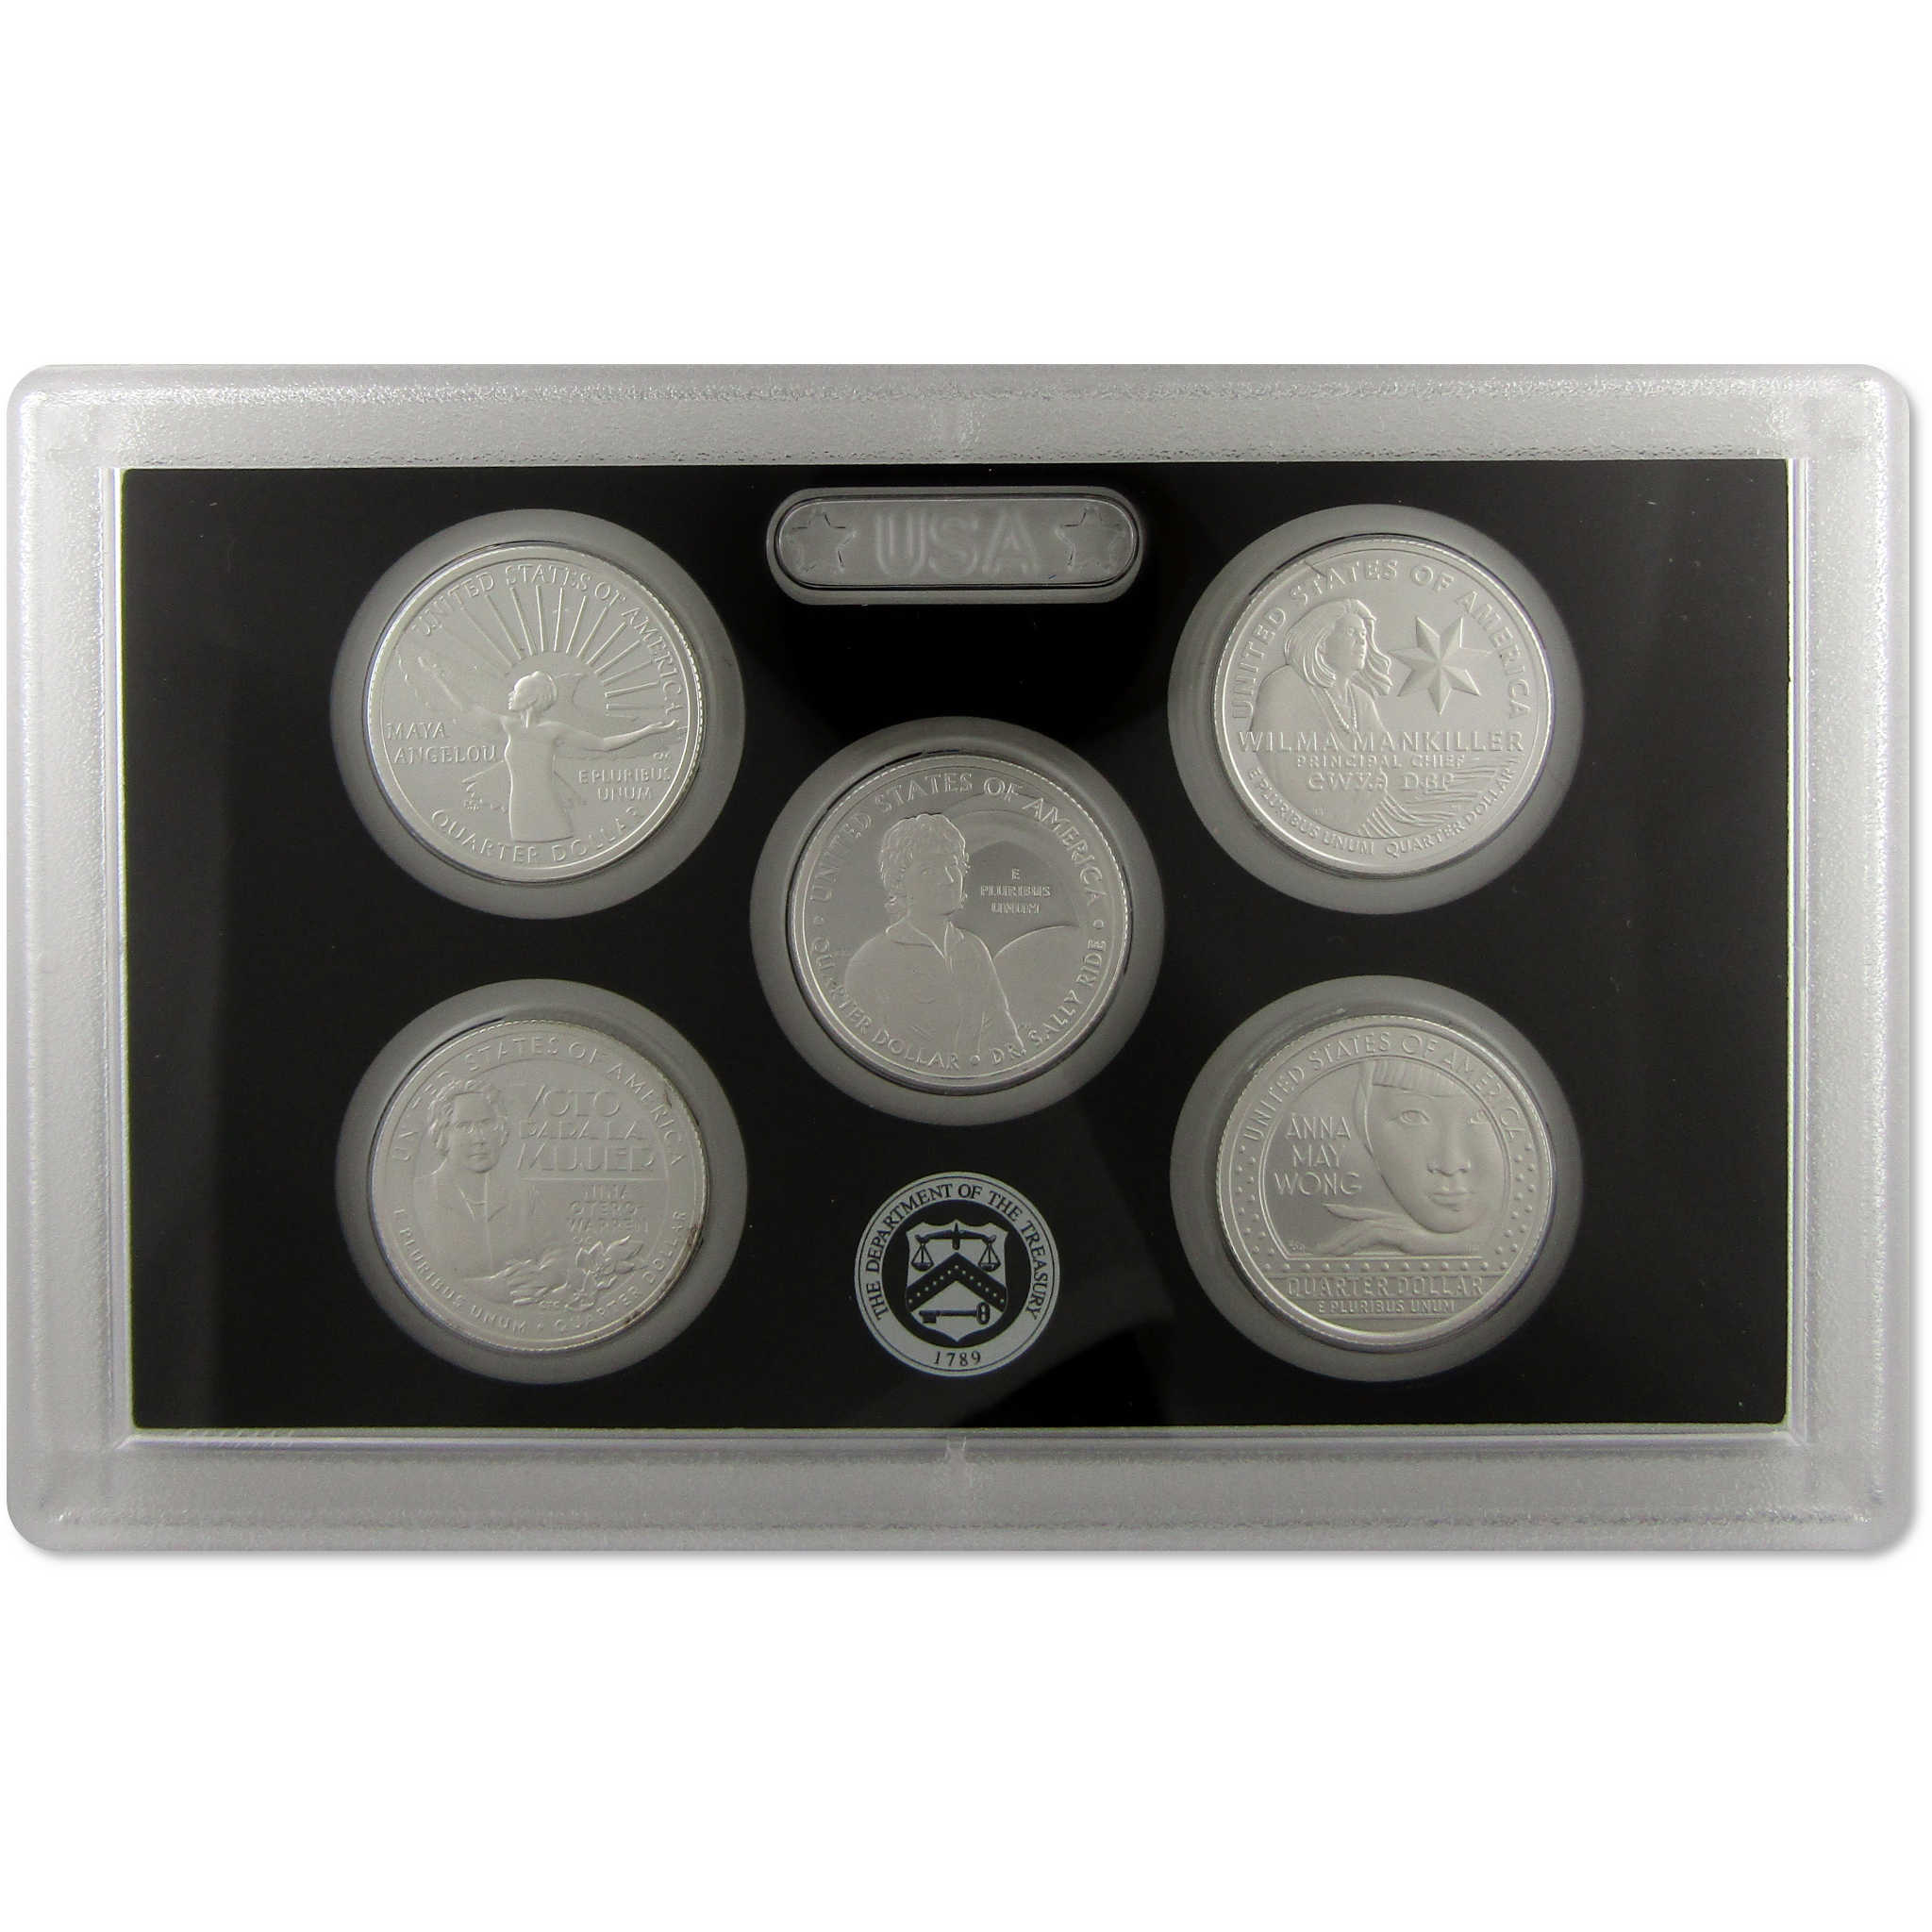 2022 Silver Proof Set U.S Mint Original Government Packaging OGP COA